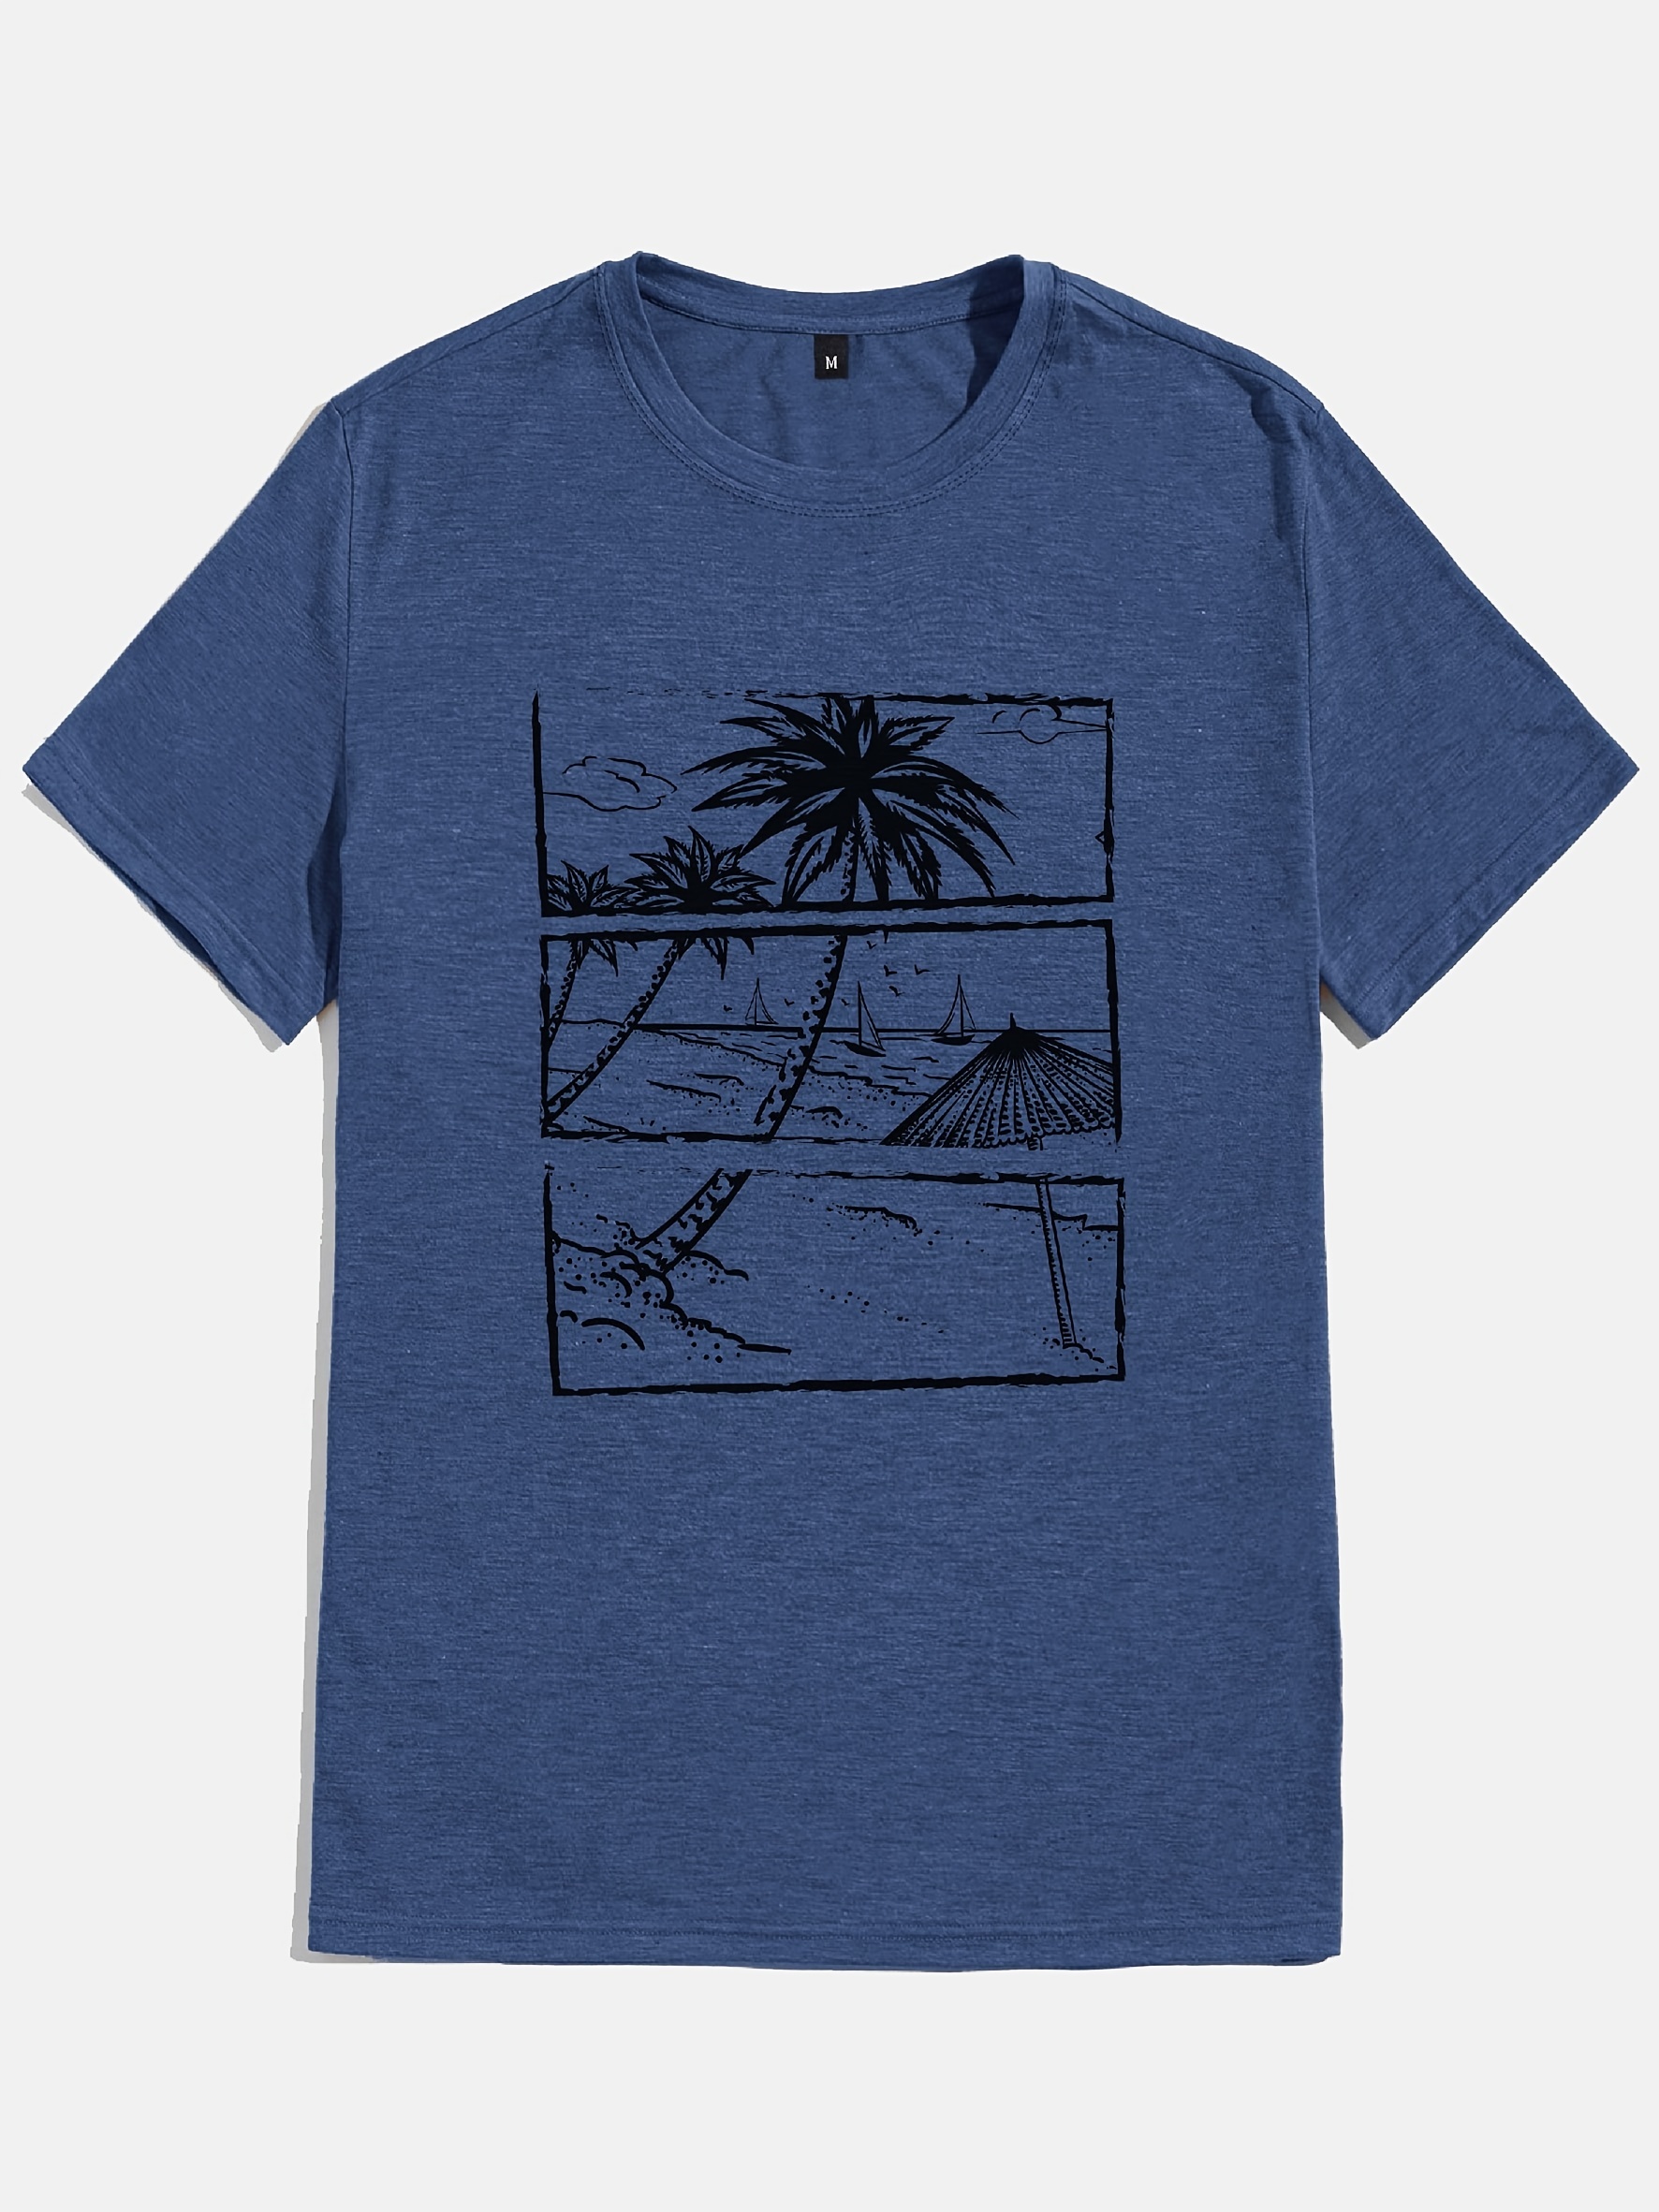 hawaiian beach round neck graphic t shirts causal tees short sleeves comfortable tops mens summer clothing details 14